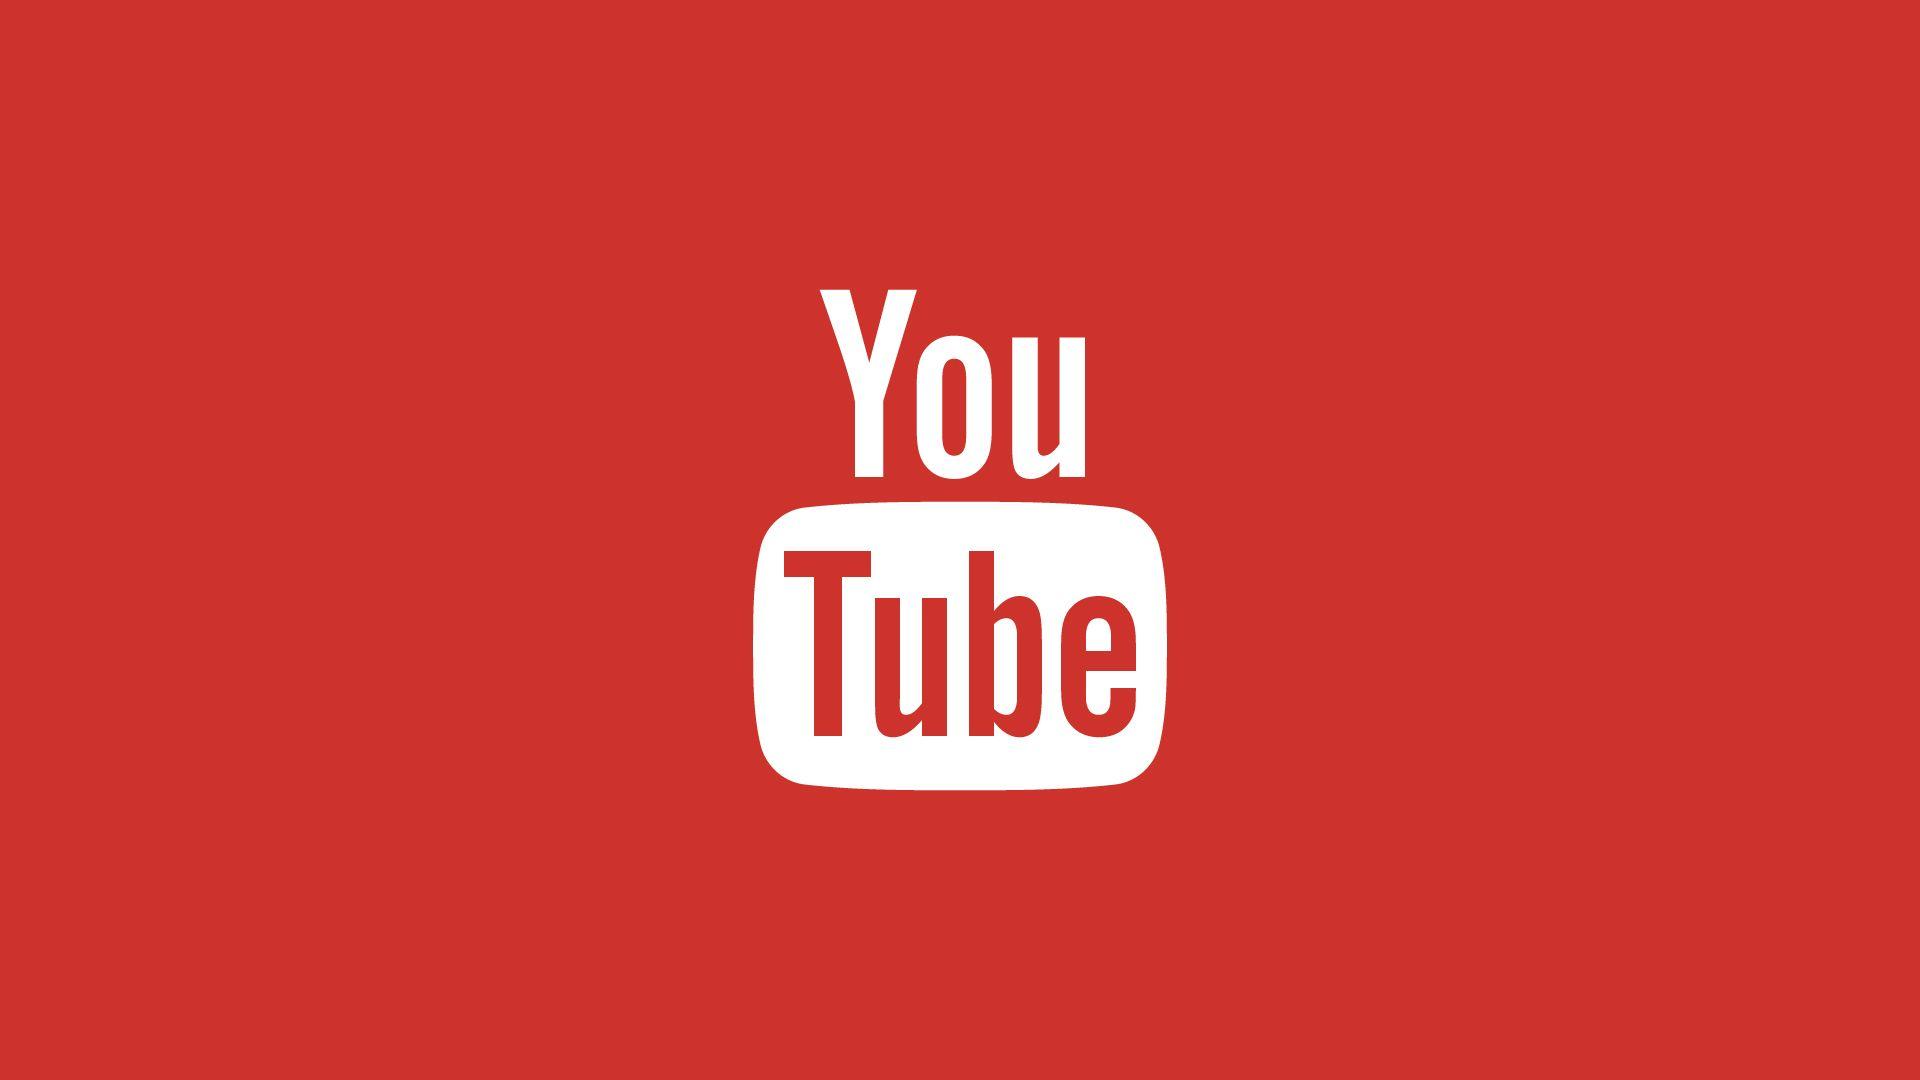 YouTube Brush Wallpaper  Facebook cover photos hd Youtube logo Youtube  logo png